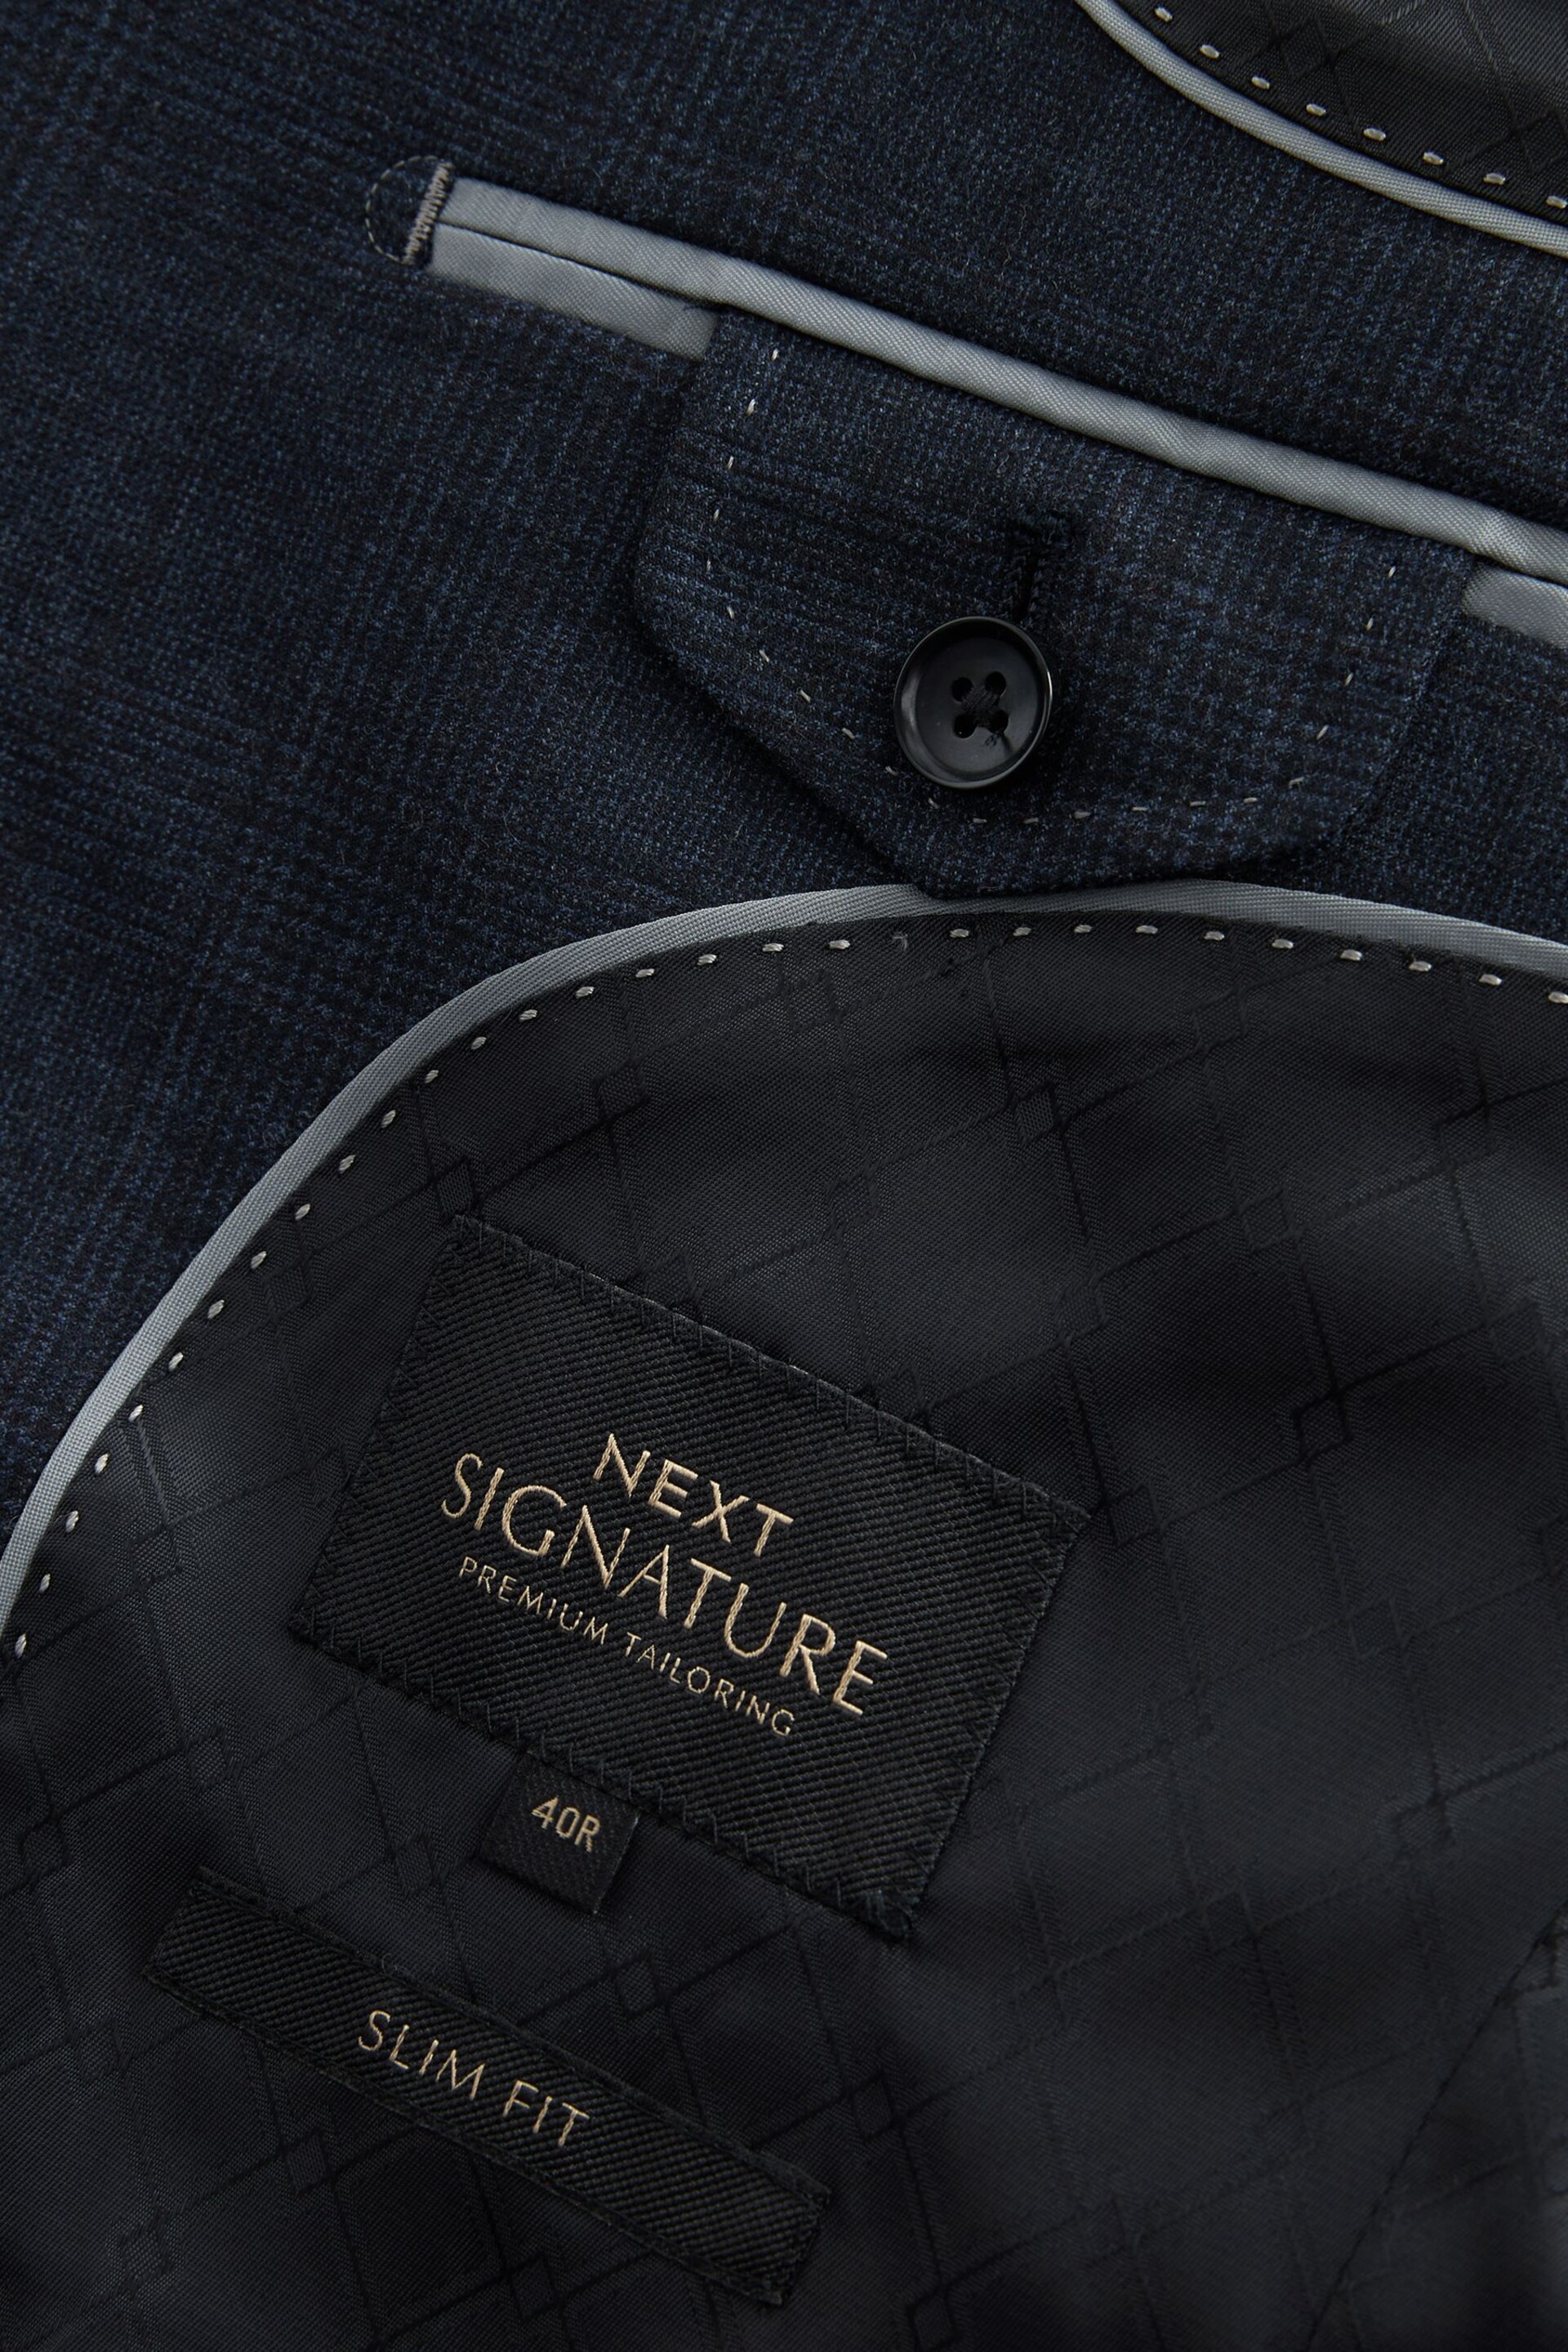 Navy Blue Slim Fit Signature Cerruti Wool Check Suit Jacket - Image 10 of 12